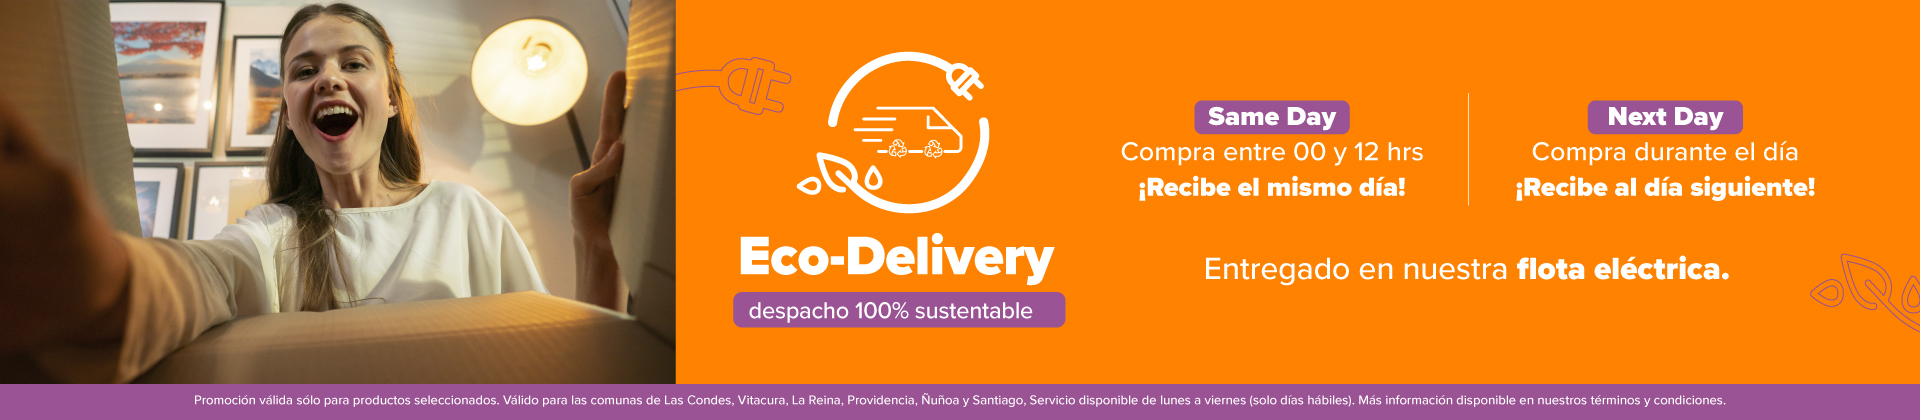 Eco Delivery Mademsa - Despacho 100% Sustentable - Same Day Next Day